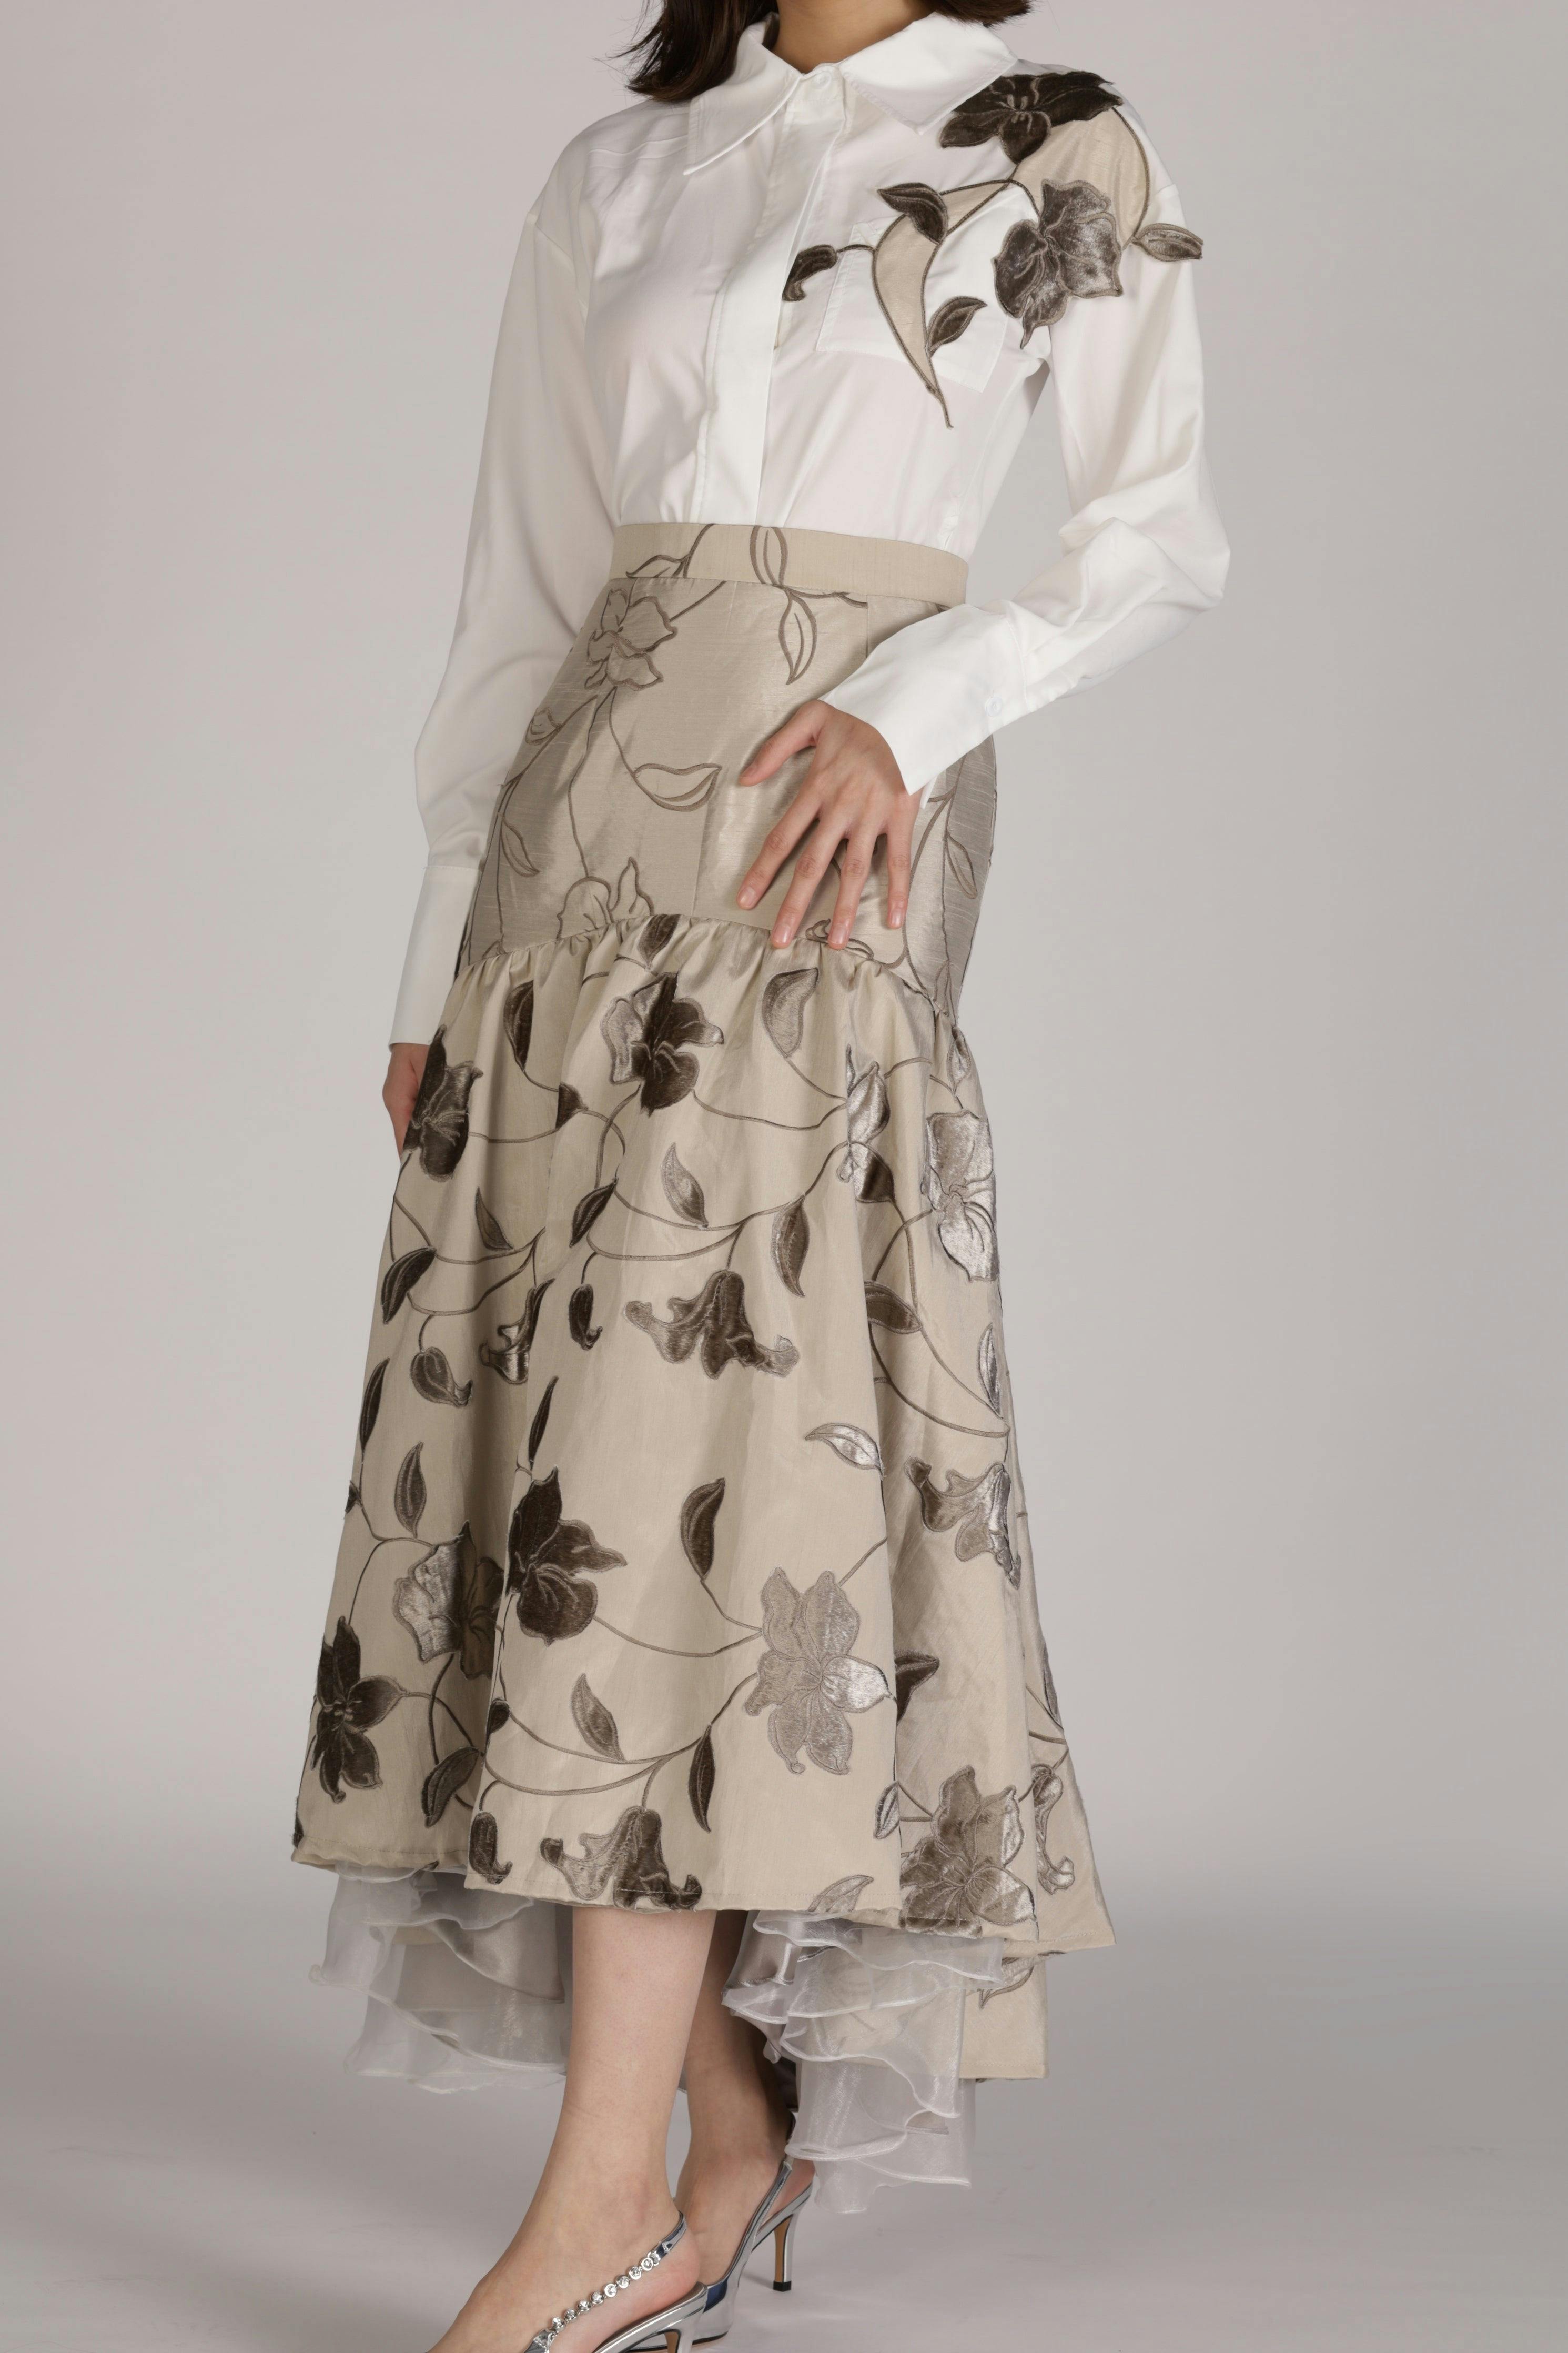 Classic A line skirt, a product by SZMAN